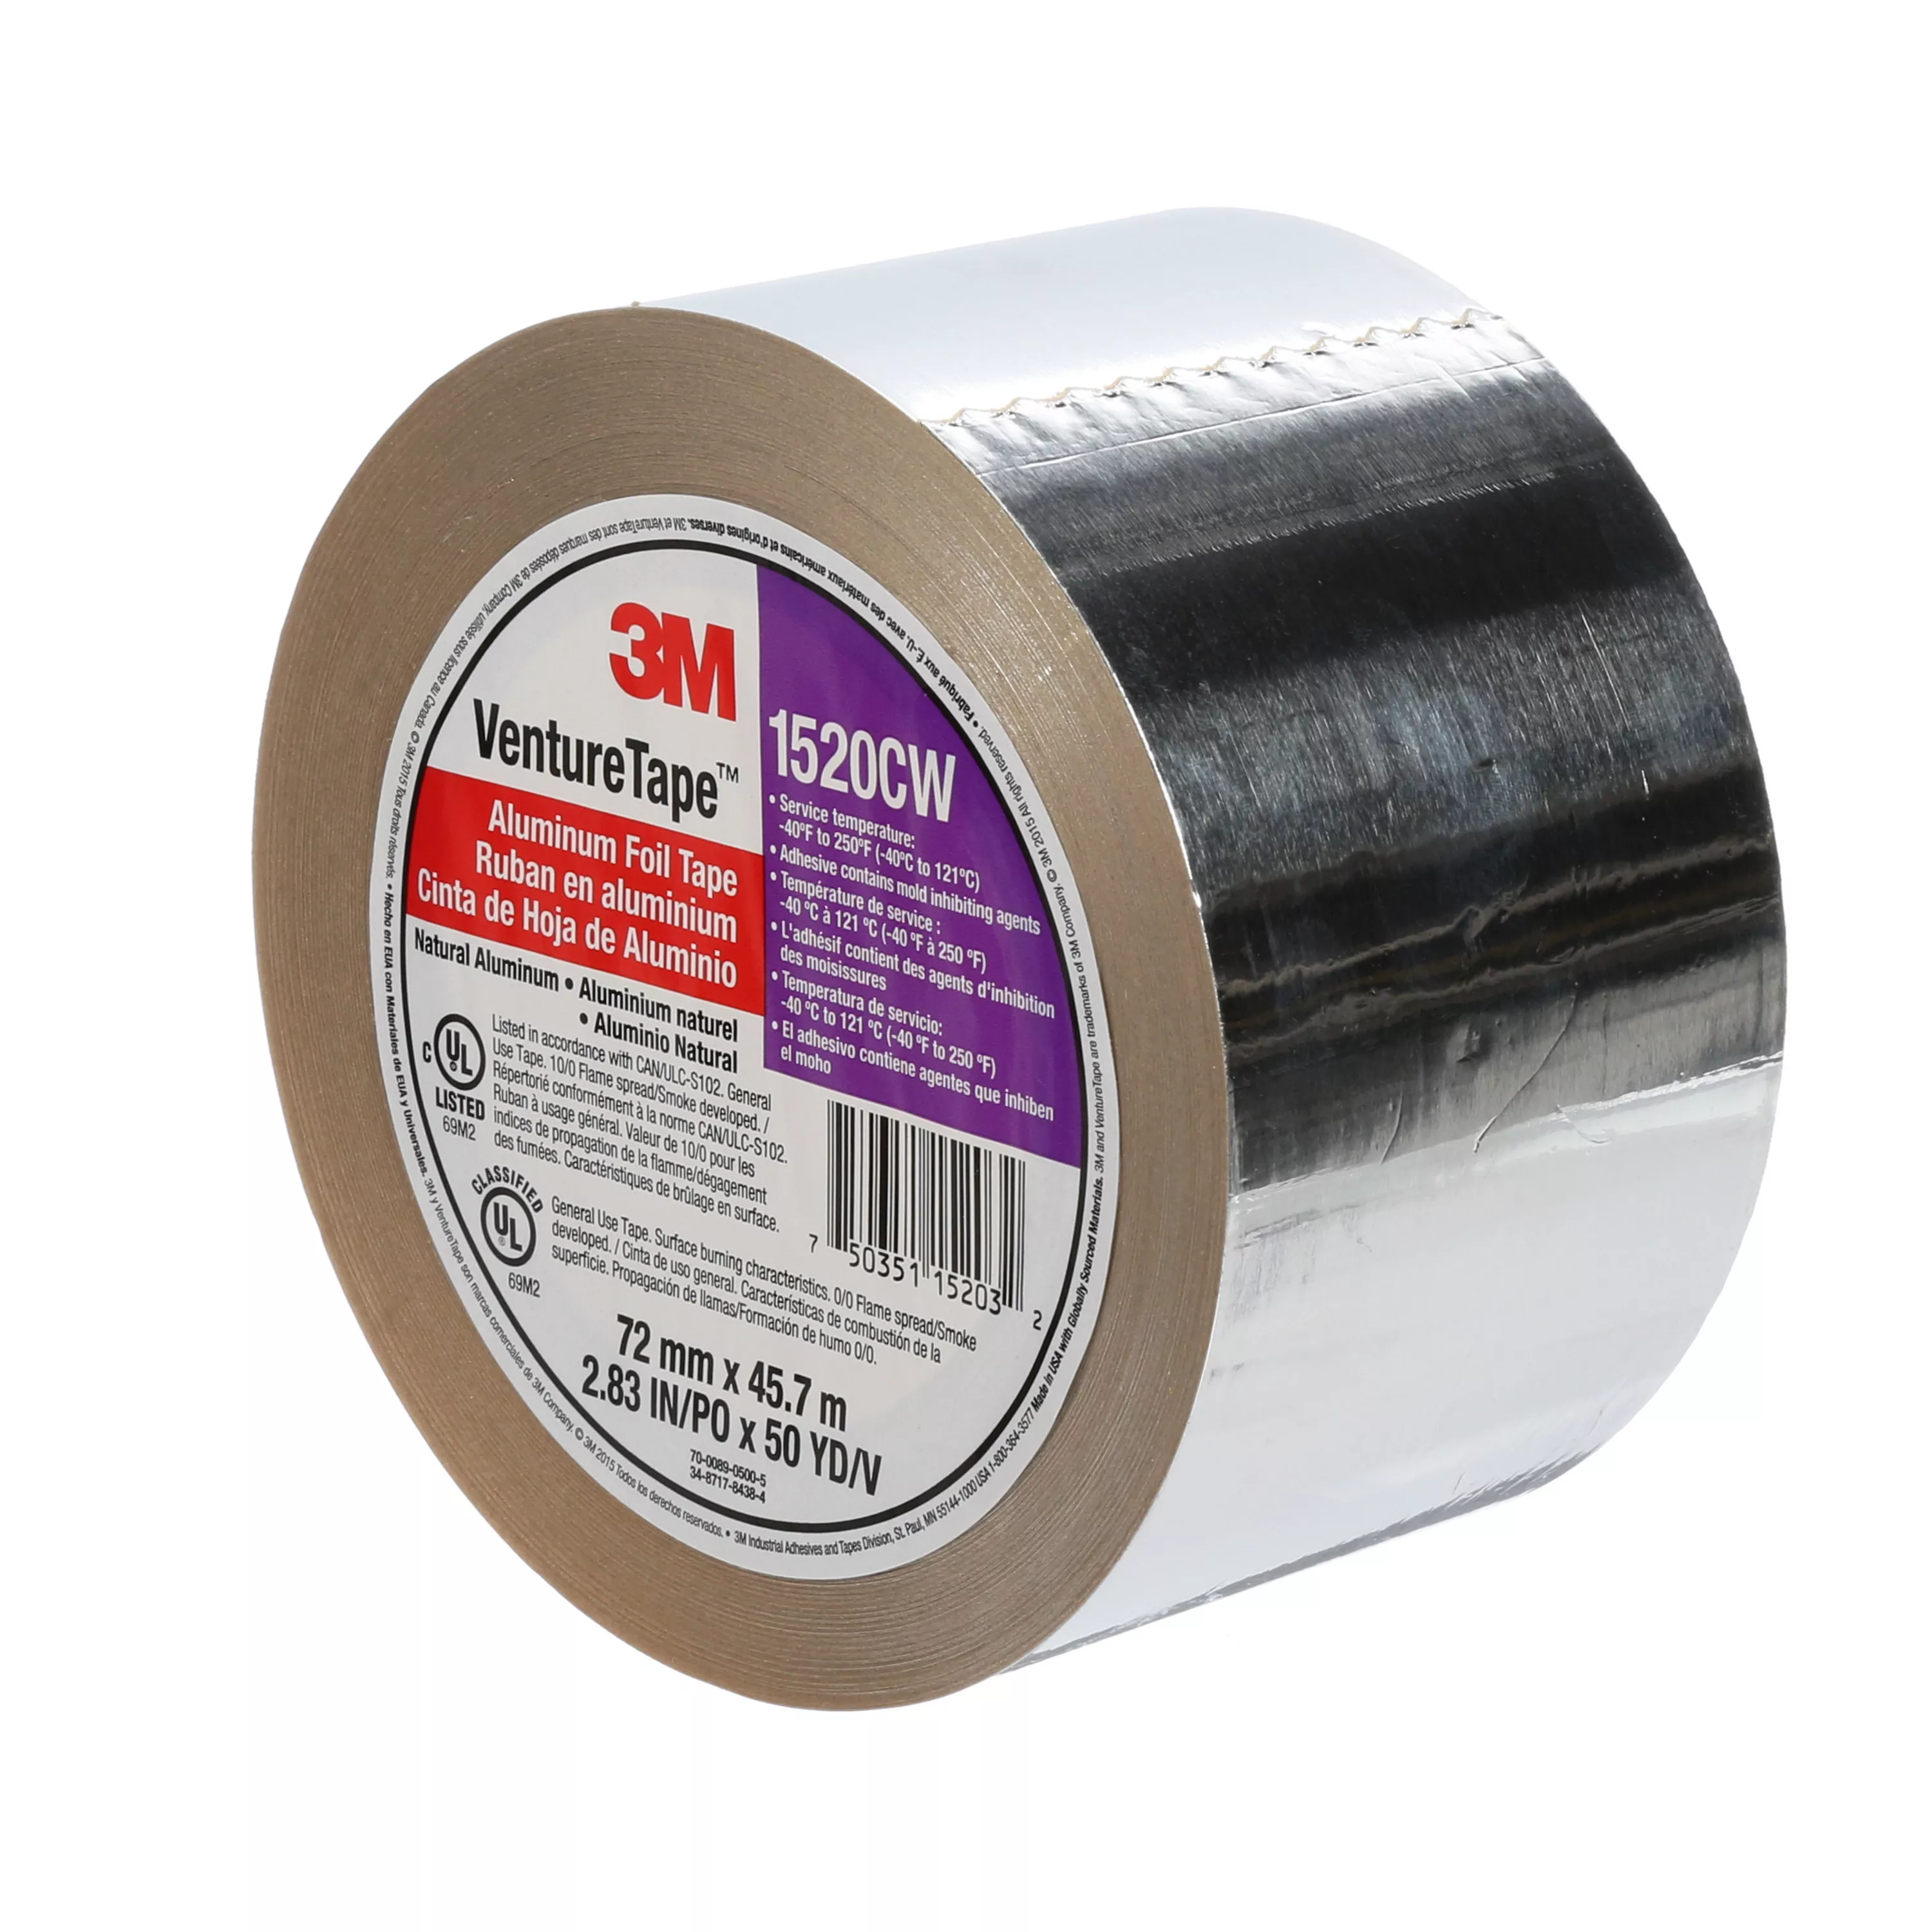 SKU 7100043713 | 3M™ Venture Tape™ Aluminum Foil Tape 1520CW